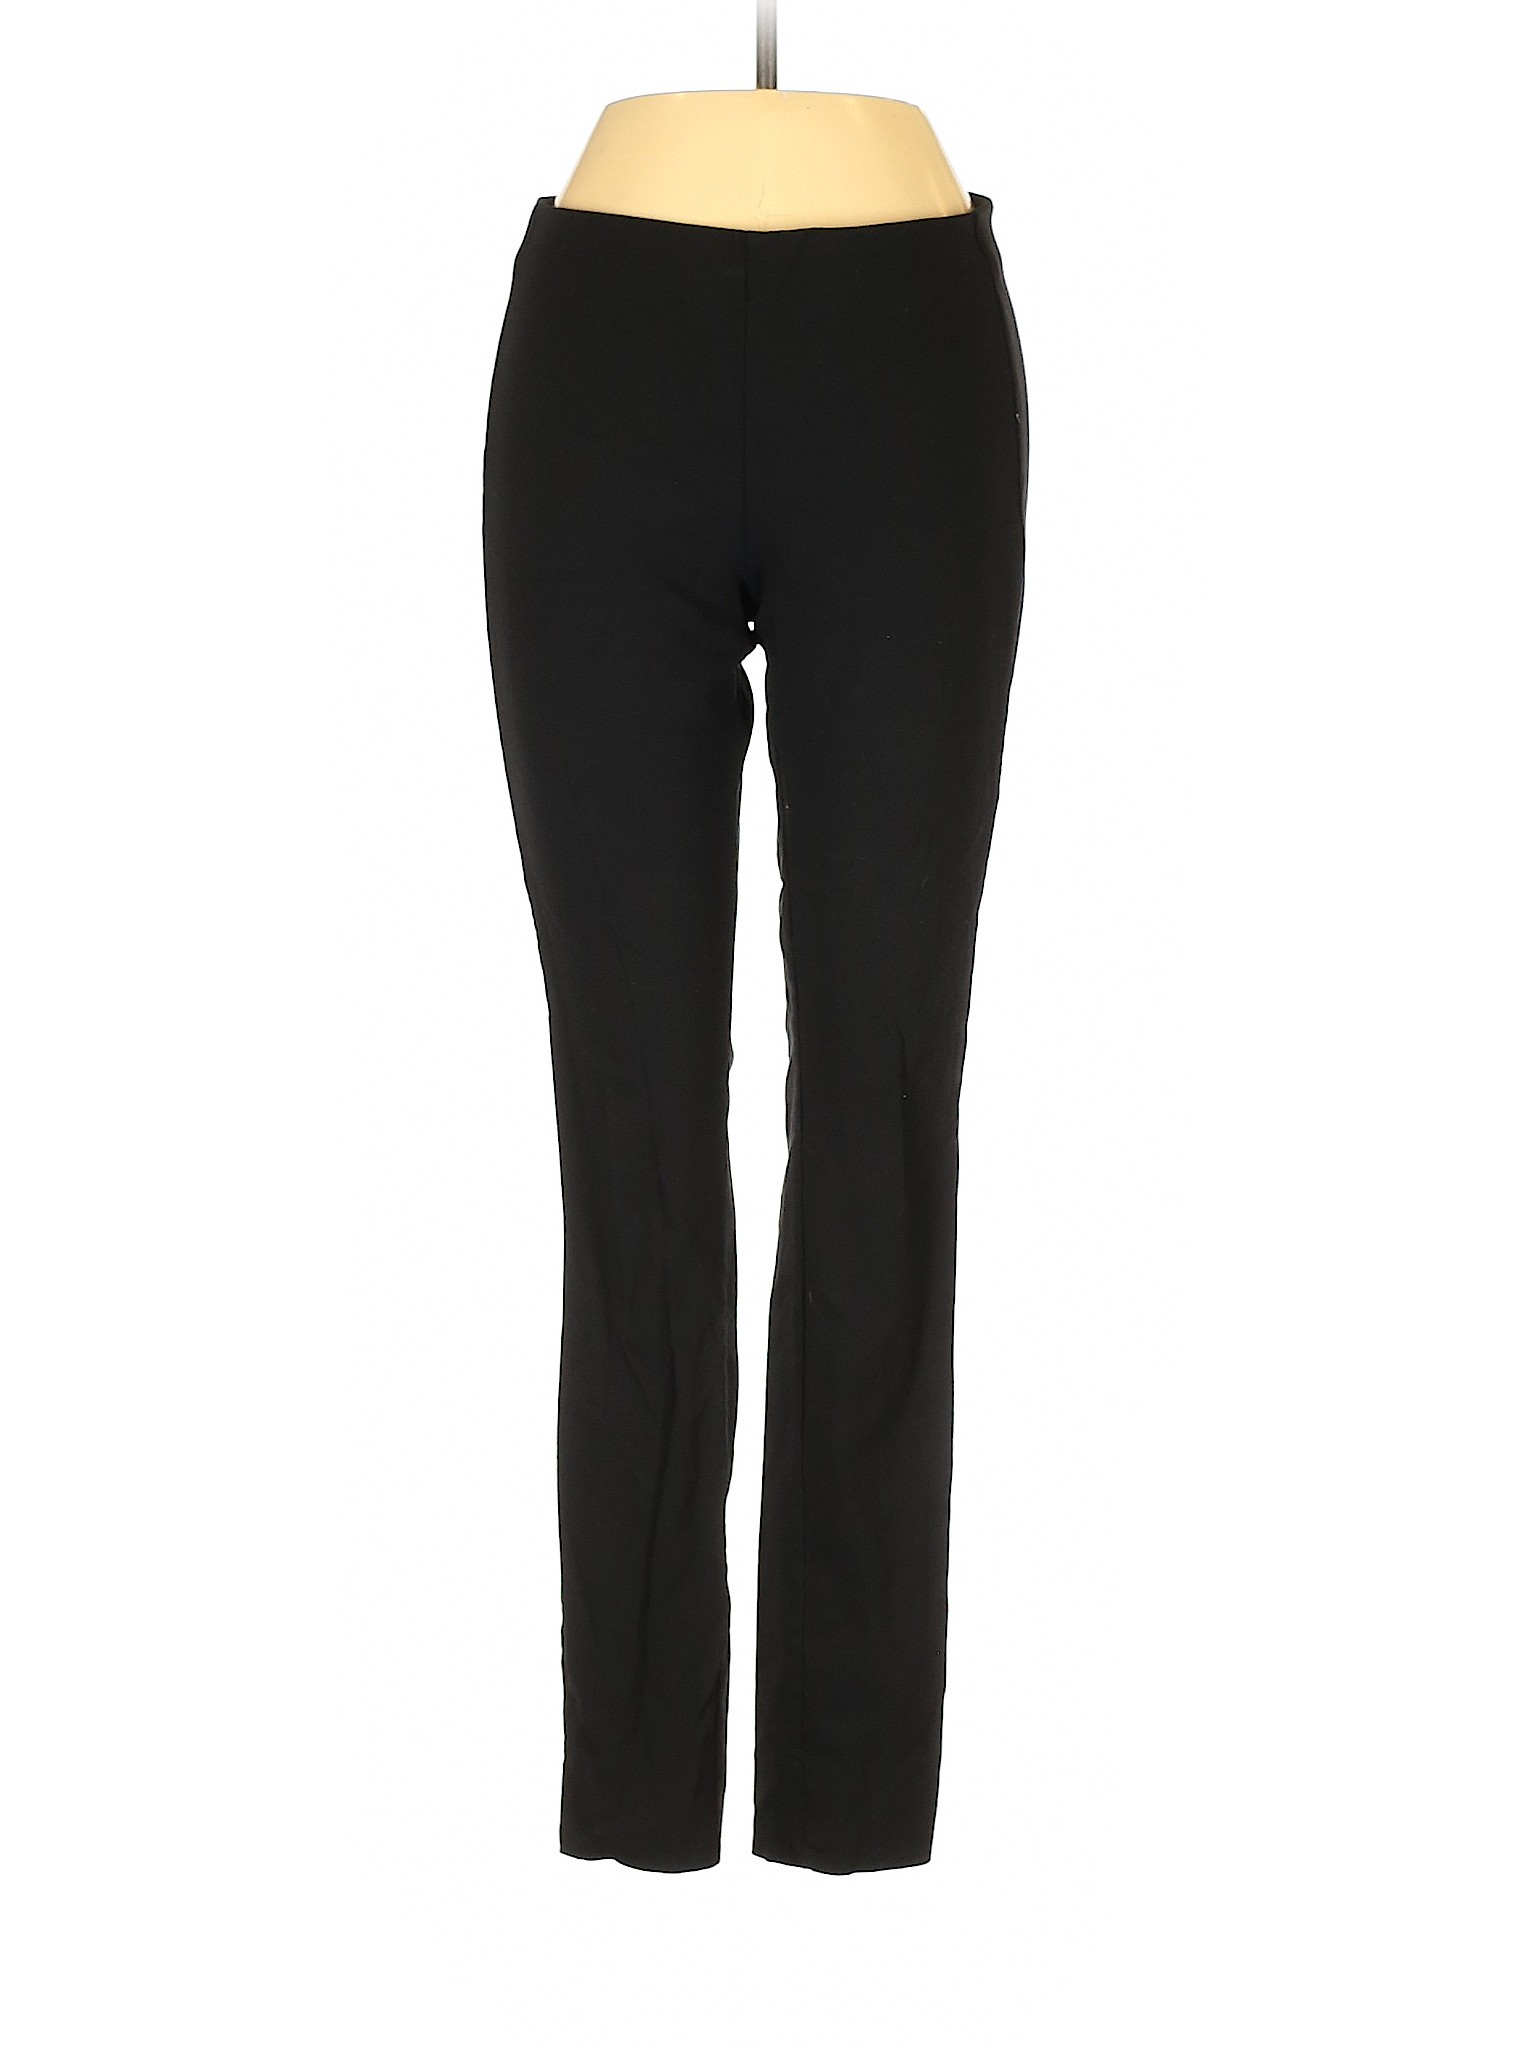 Who What Wear Women Black Dress Pants 4 | eBay